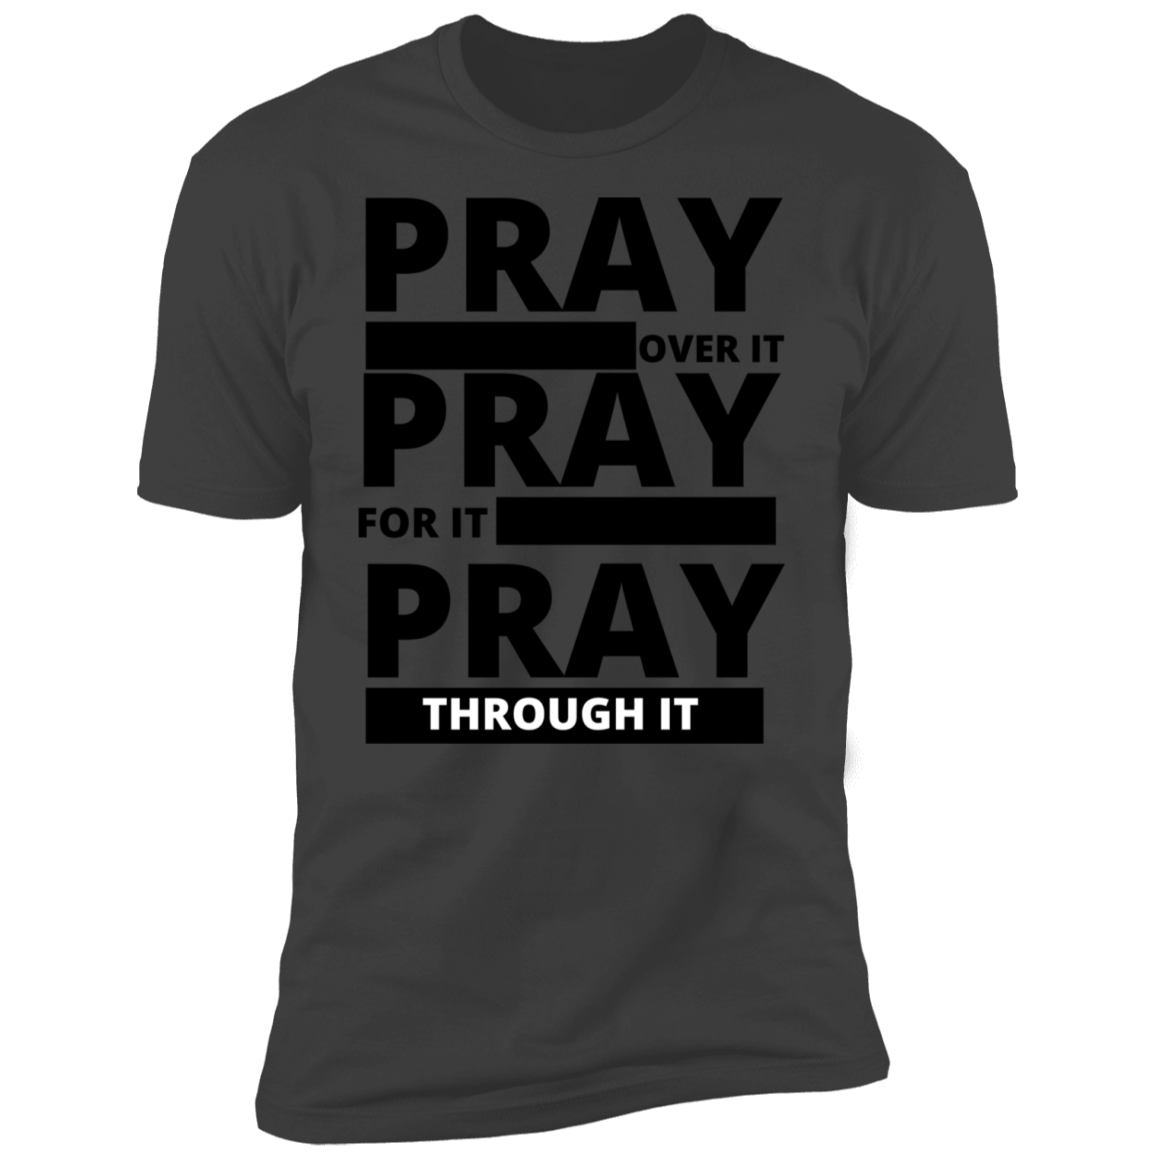 PRAY OVER IT PRAY FOR IT PRAY THROUGH IT SHIRT – SendWithLoveGifts